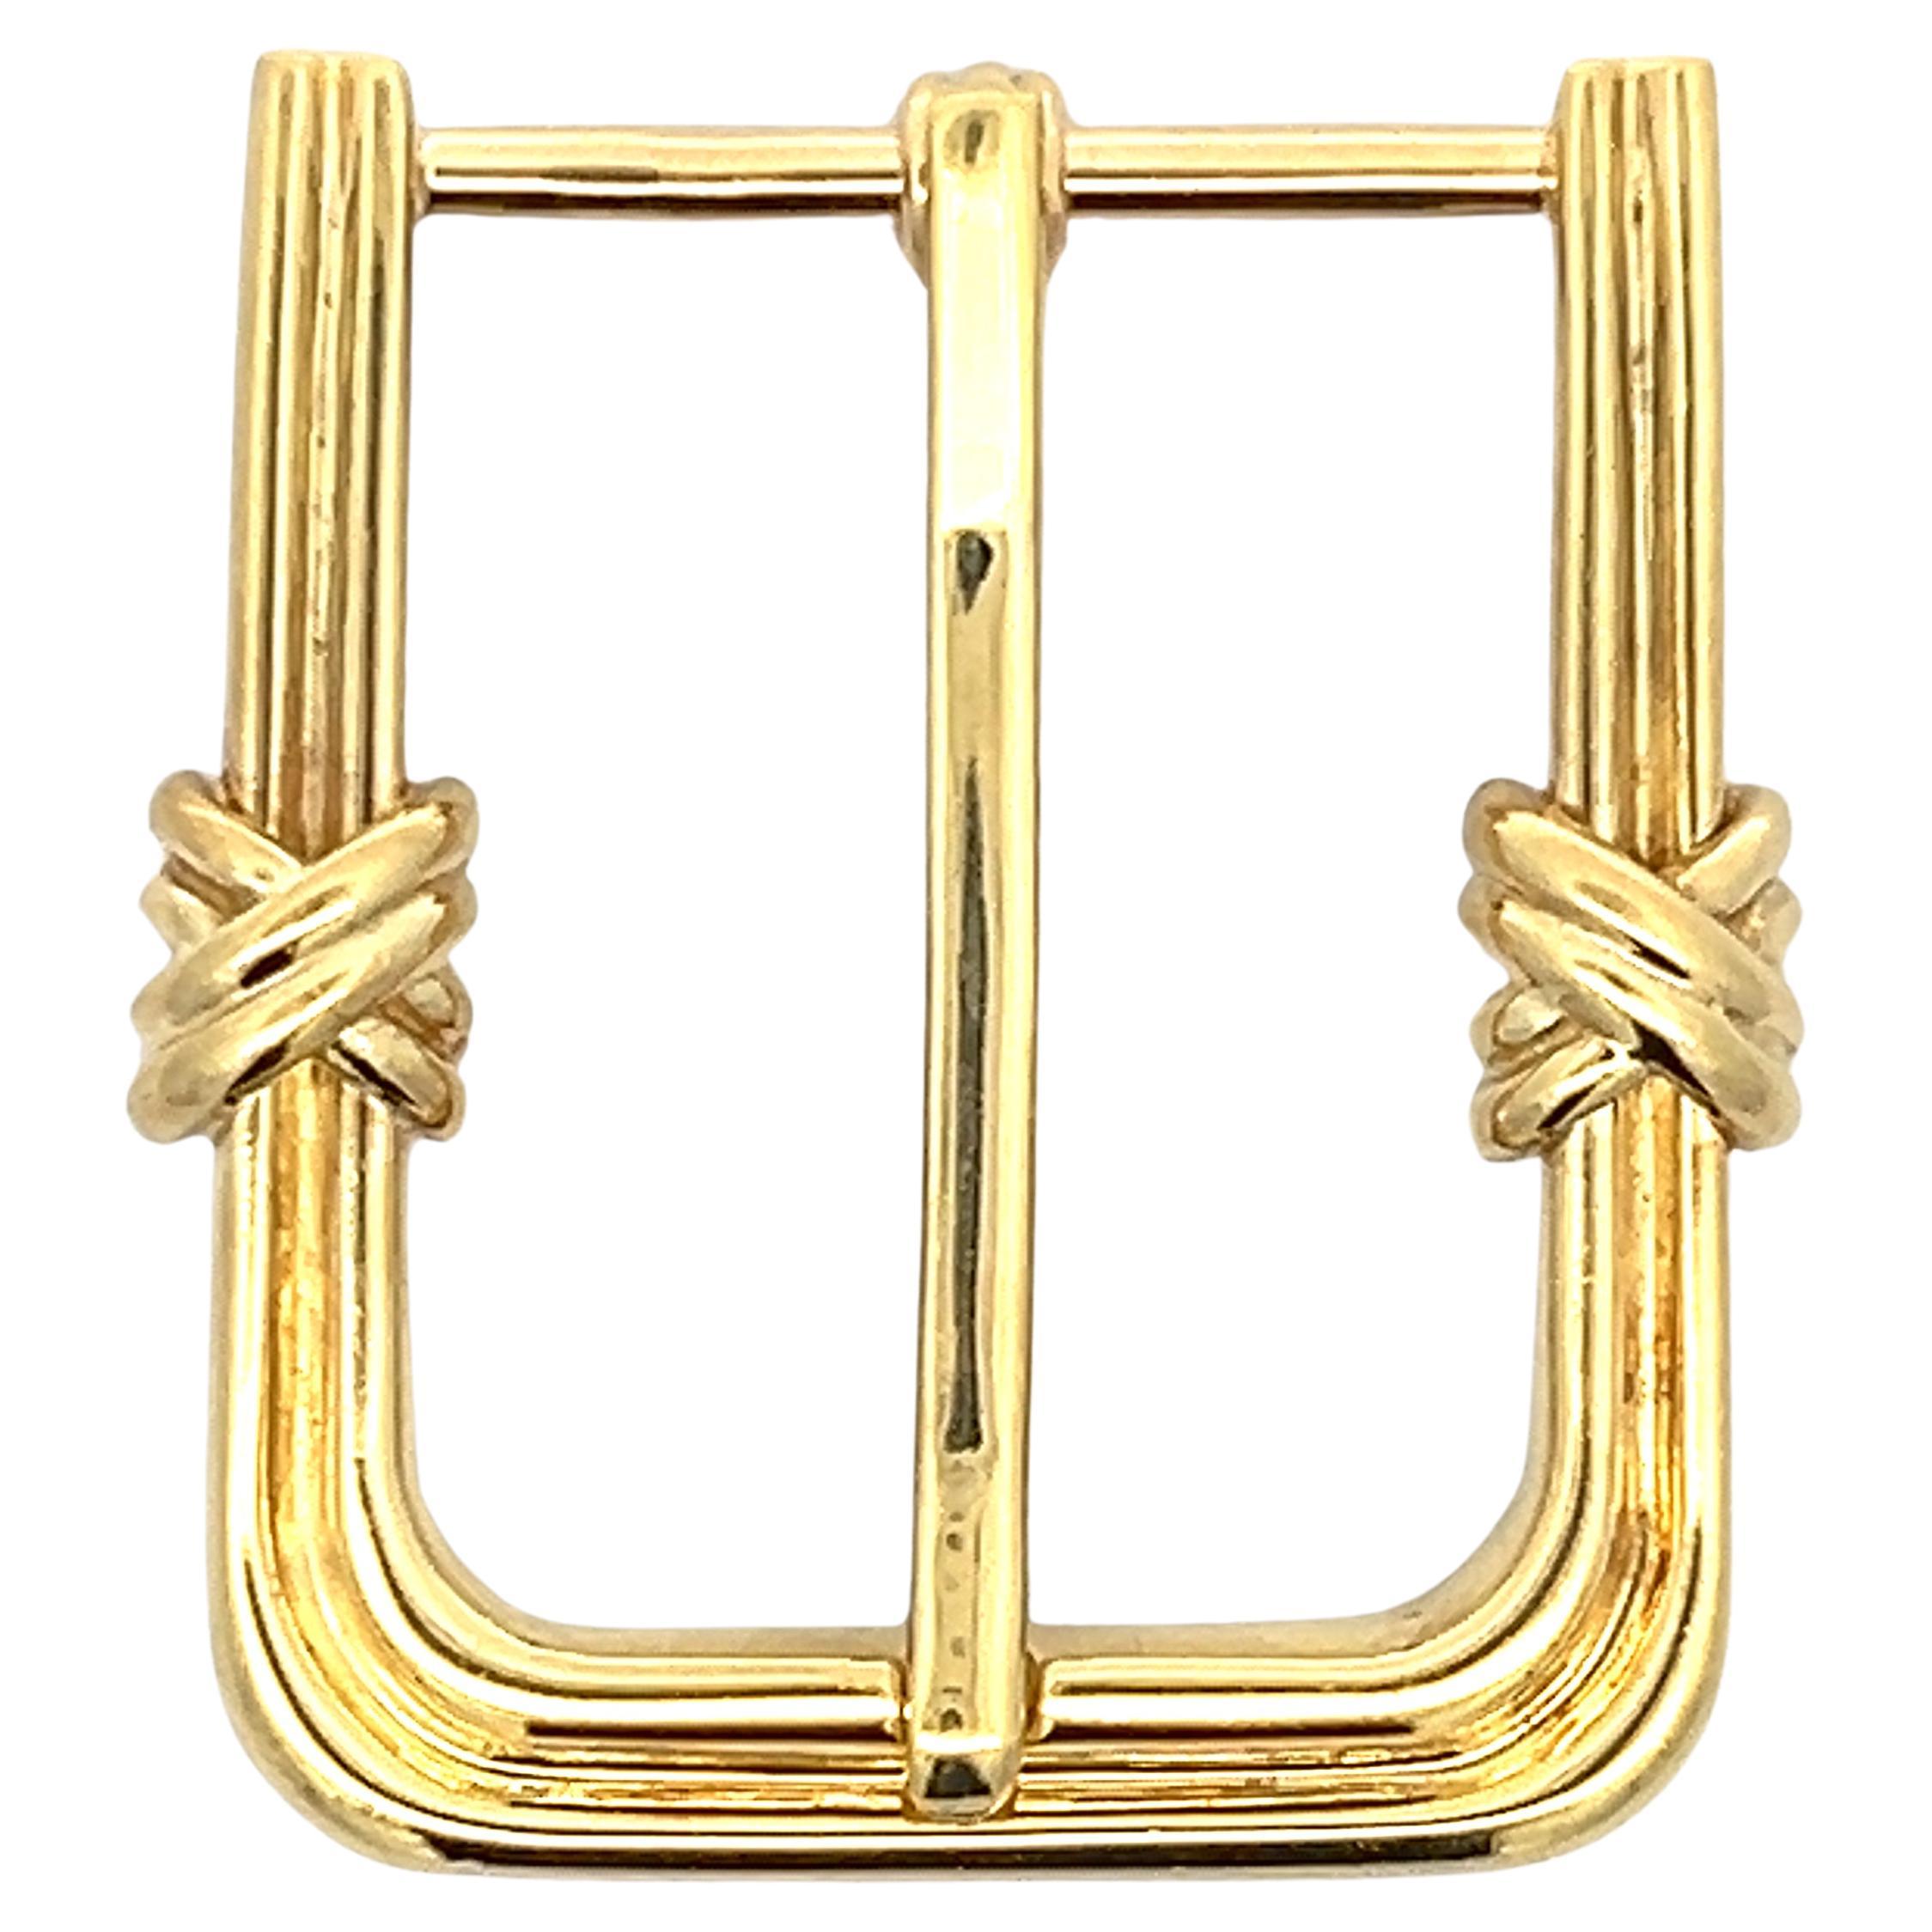 Lois D. Sasson Design 18k Yellow Gold Belt Buckle